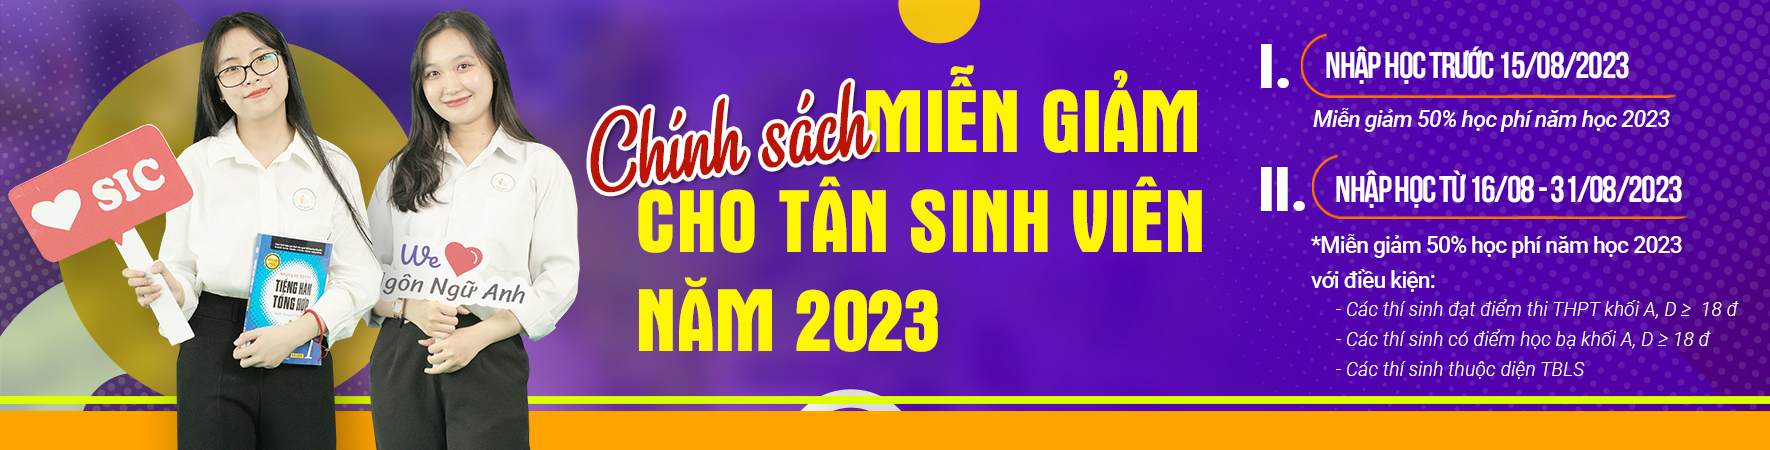 chinh-sach-mien-giam-hoc-phi-2023